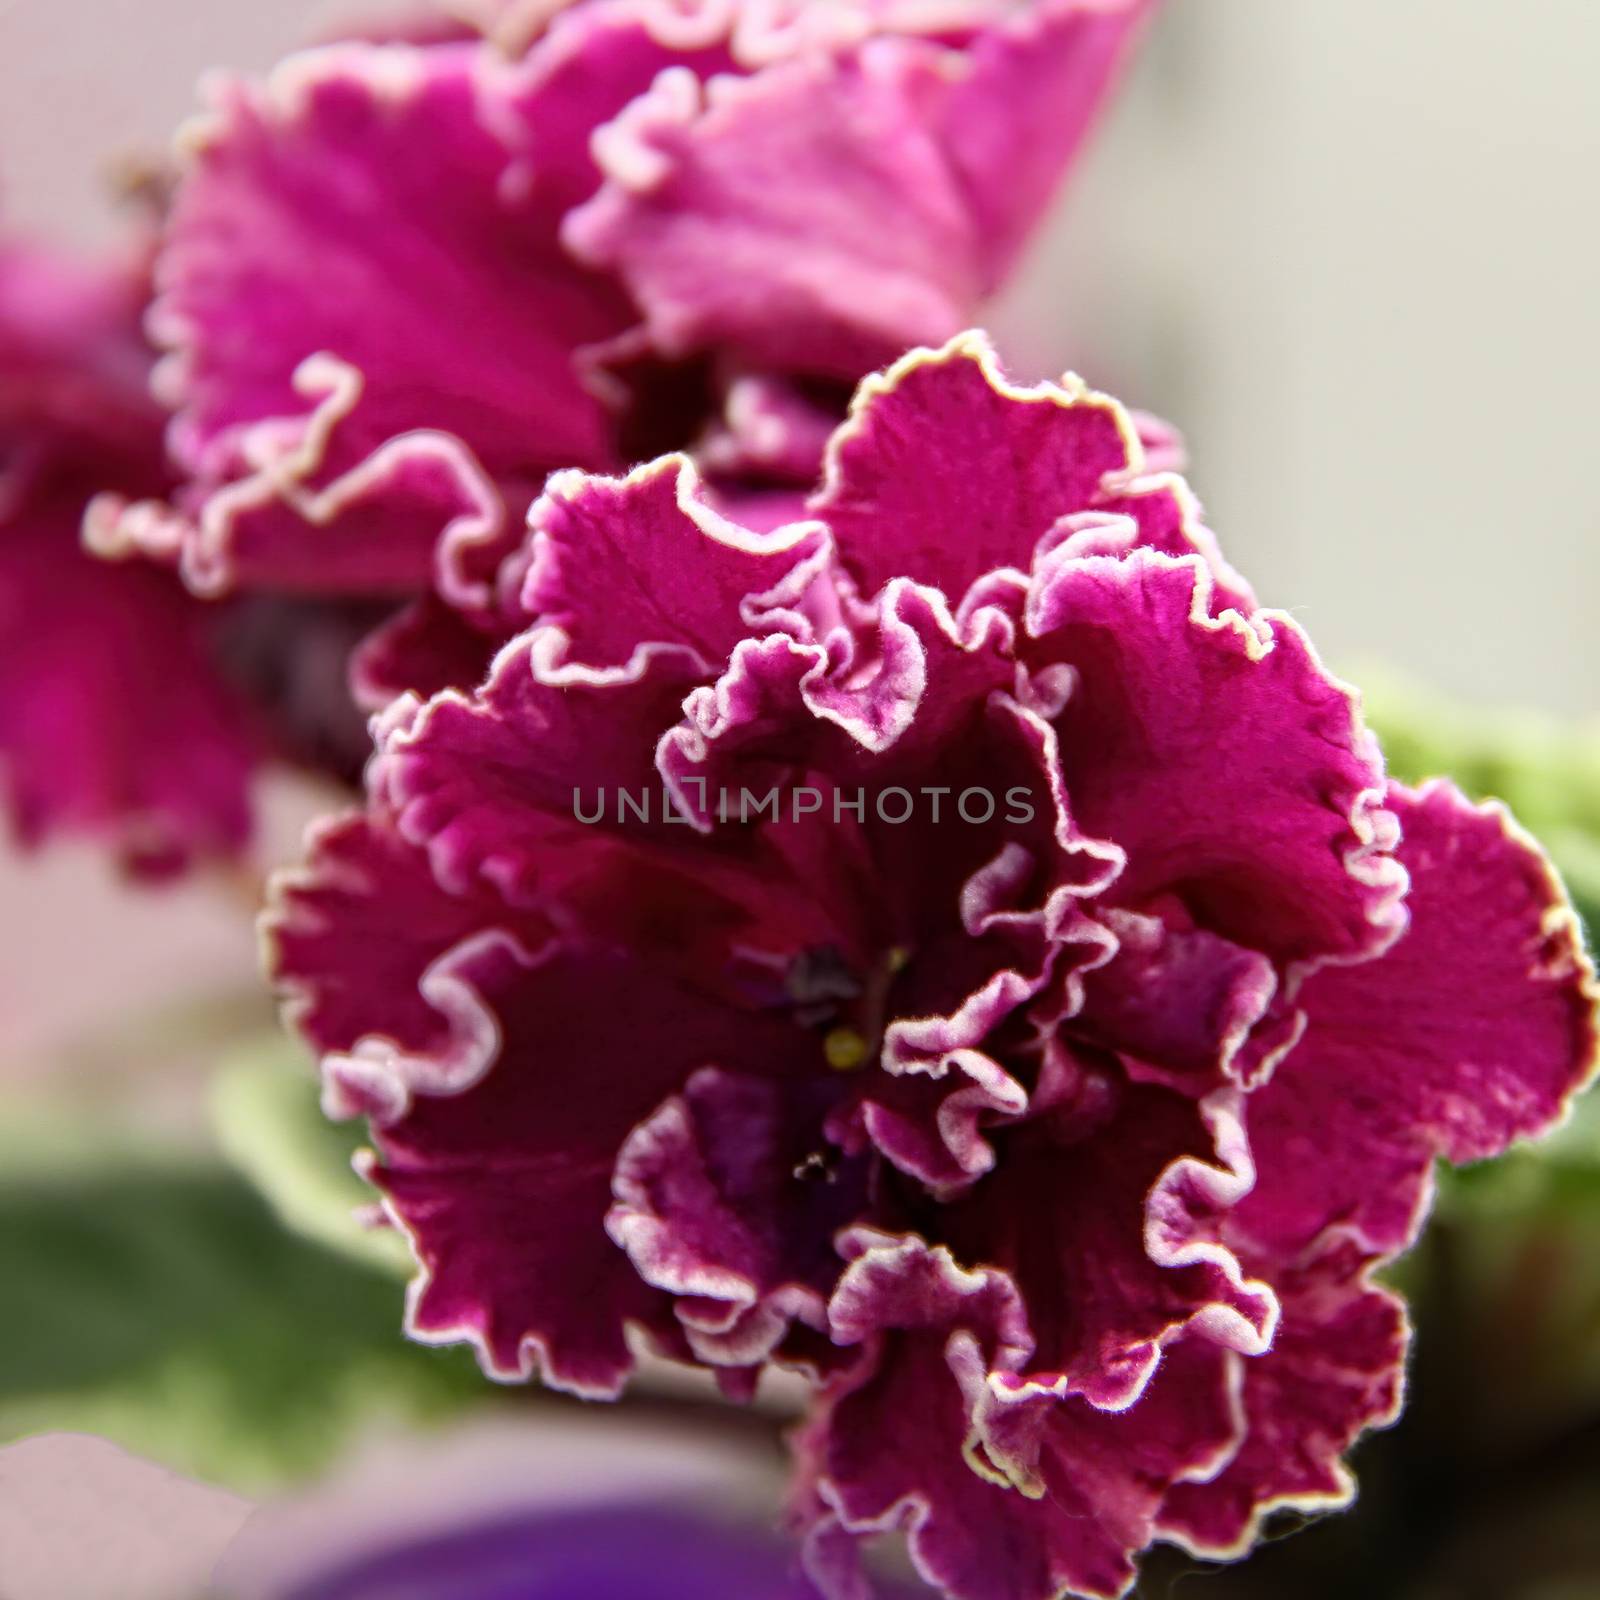 Beautiful Saintpaulia or Uzumbar violet. Purple indoor flowers close-up. Natural floral background.